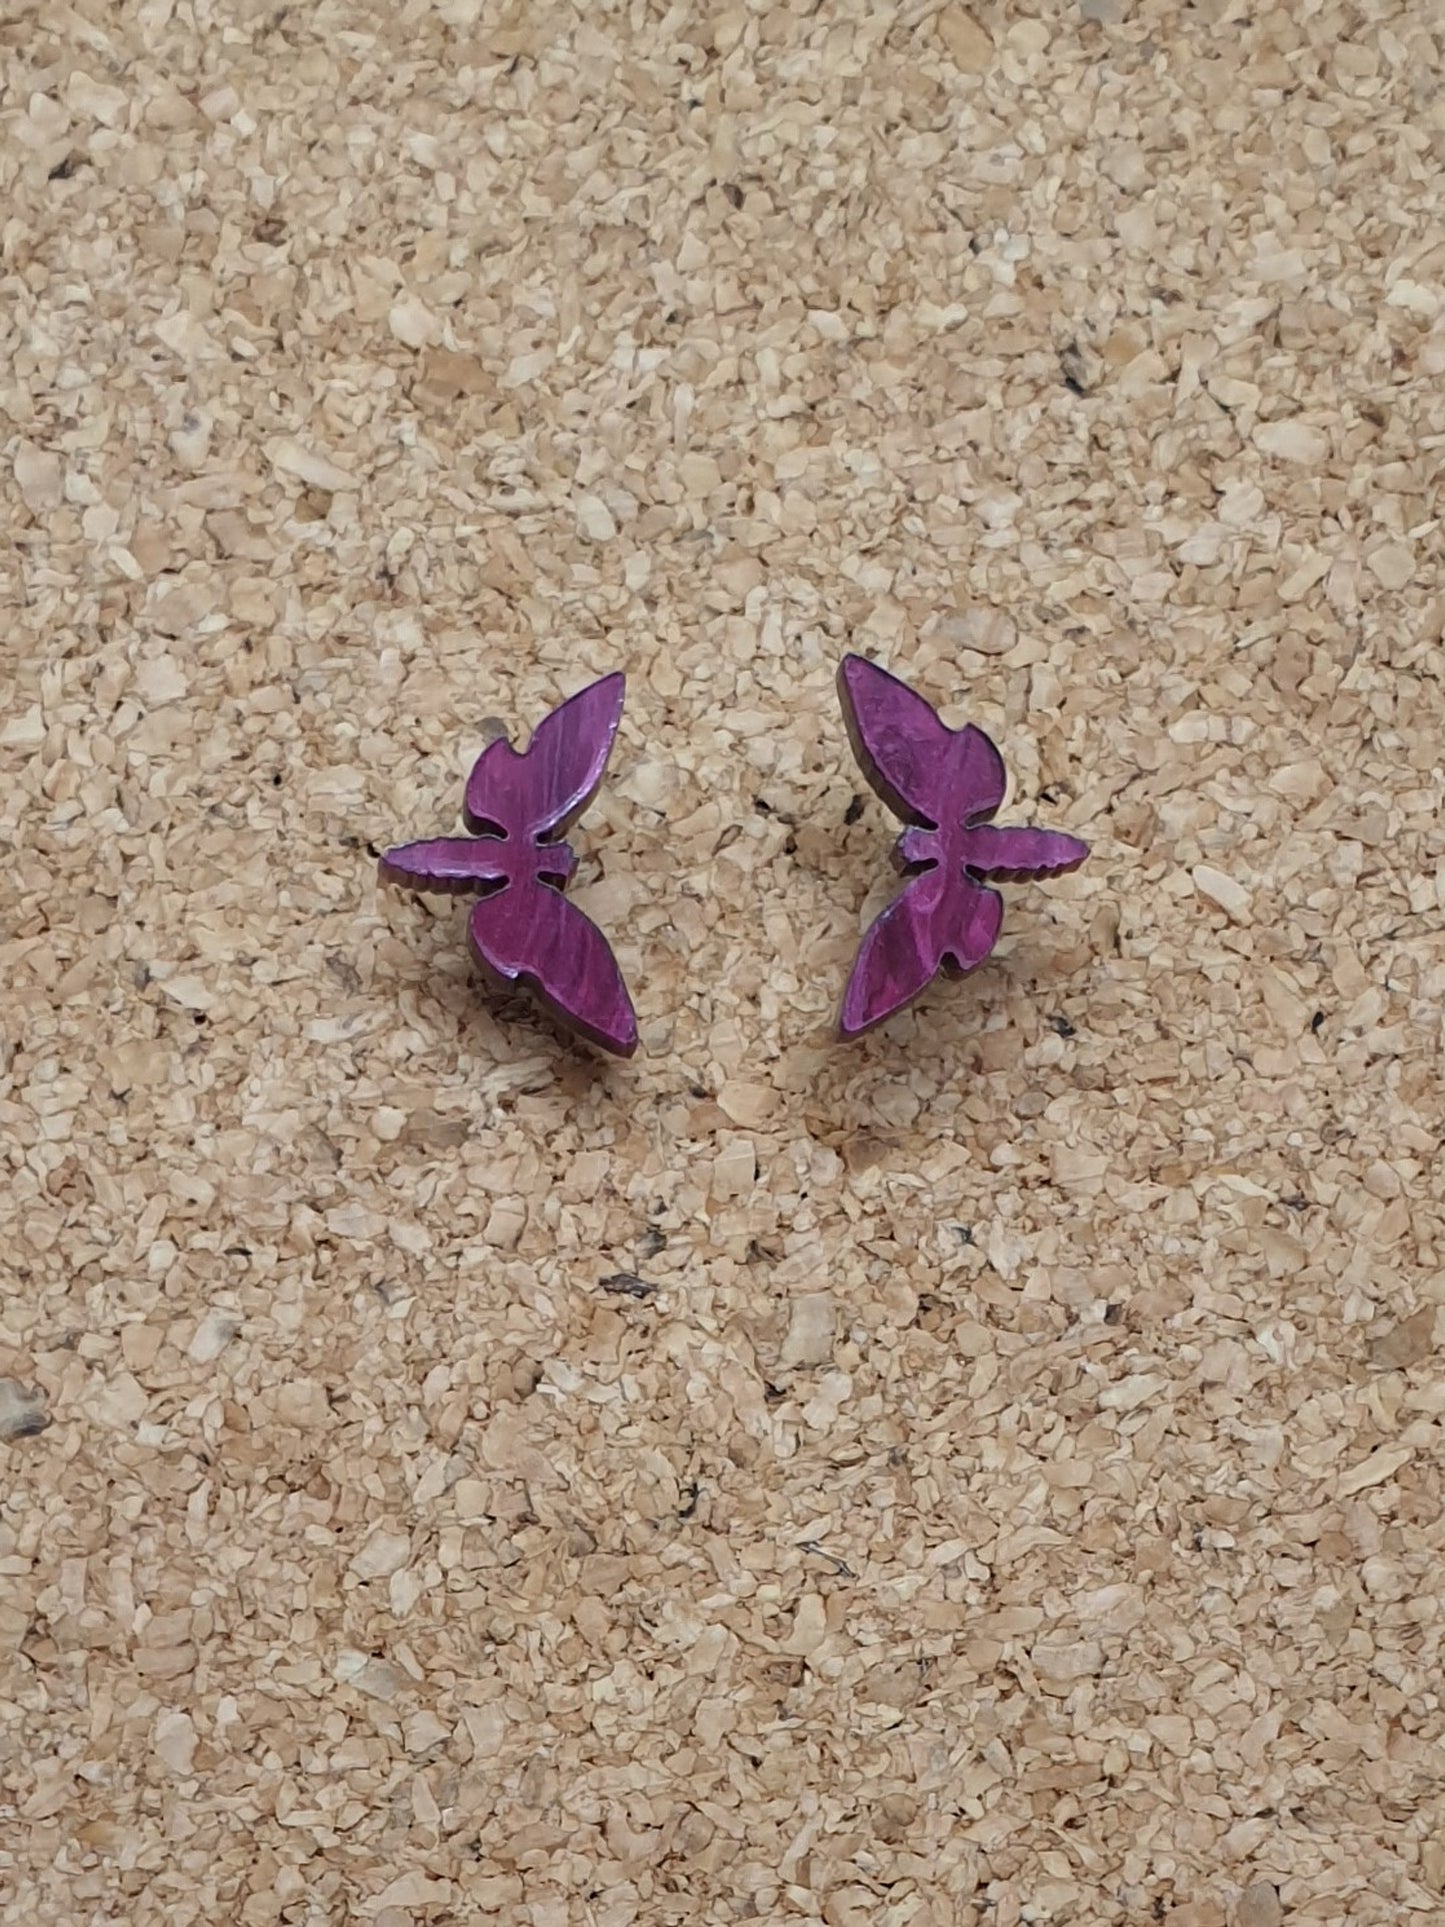 Tiny Hawkmoth stud earrings